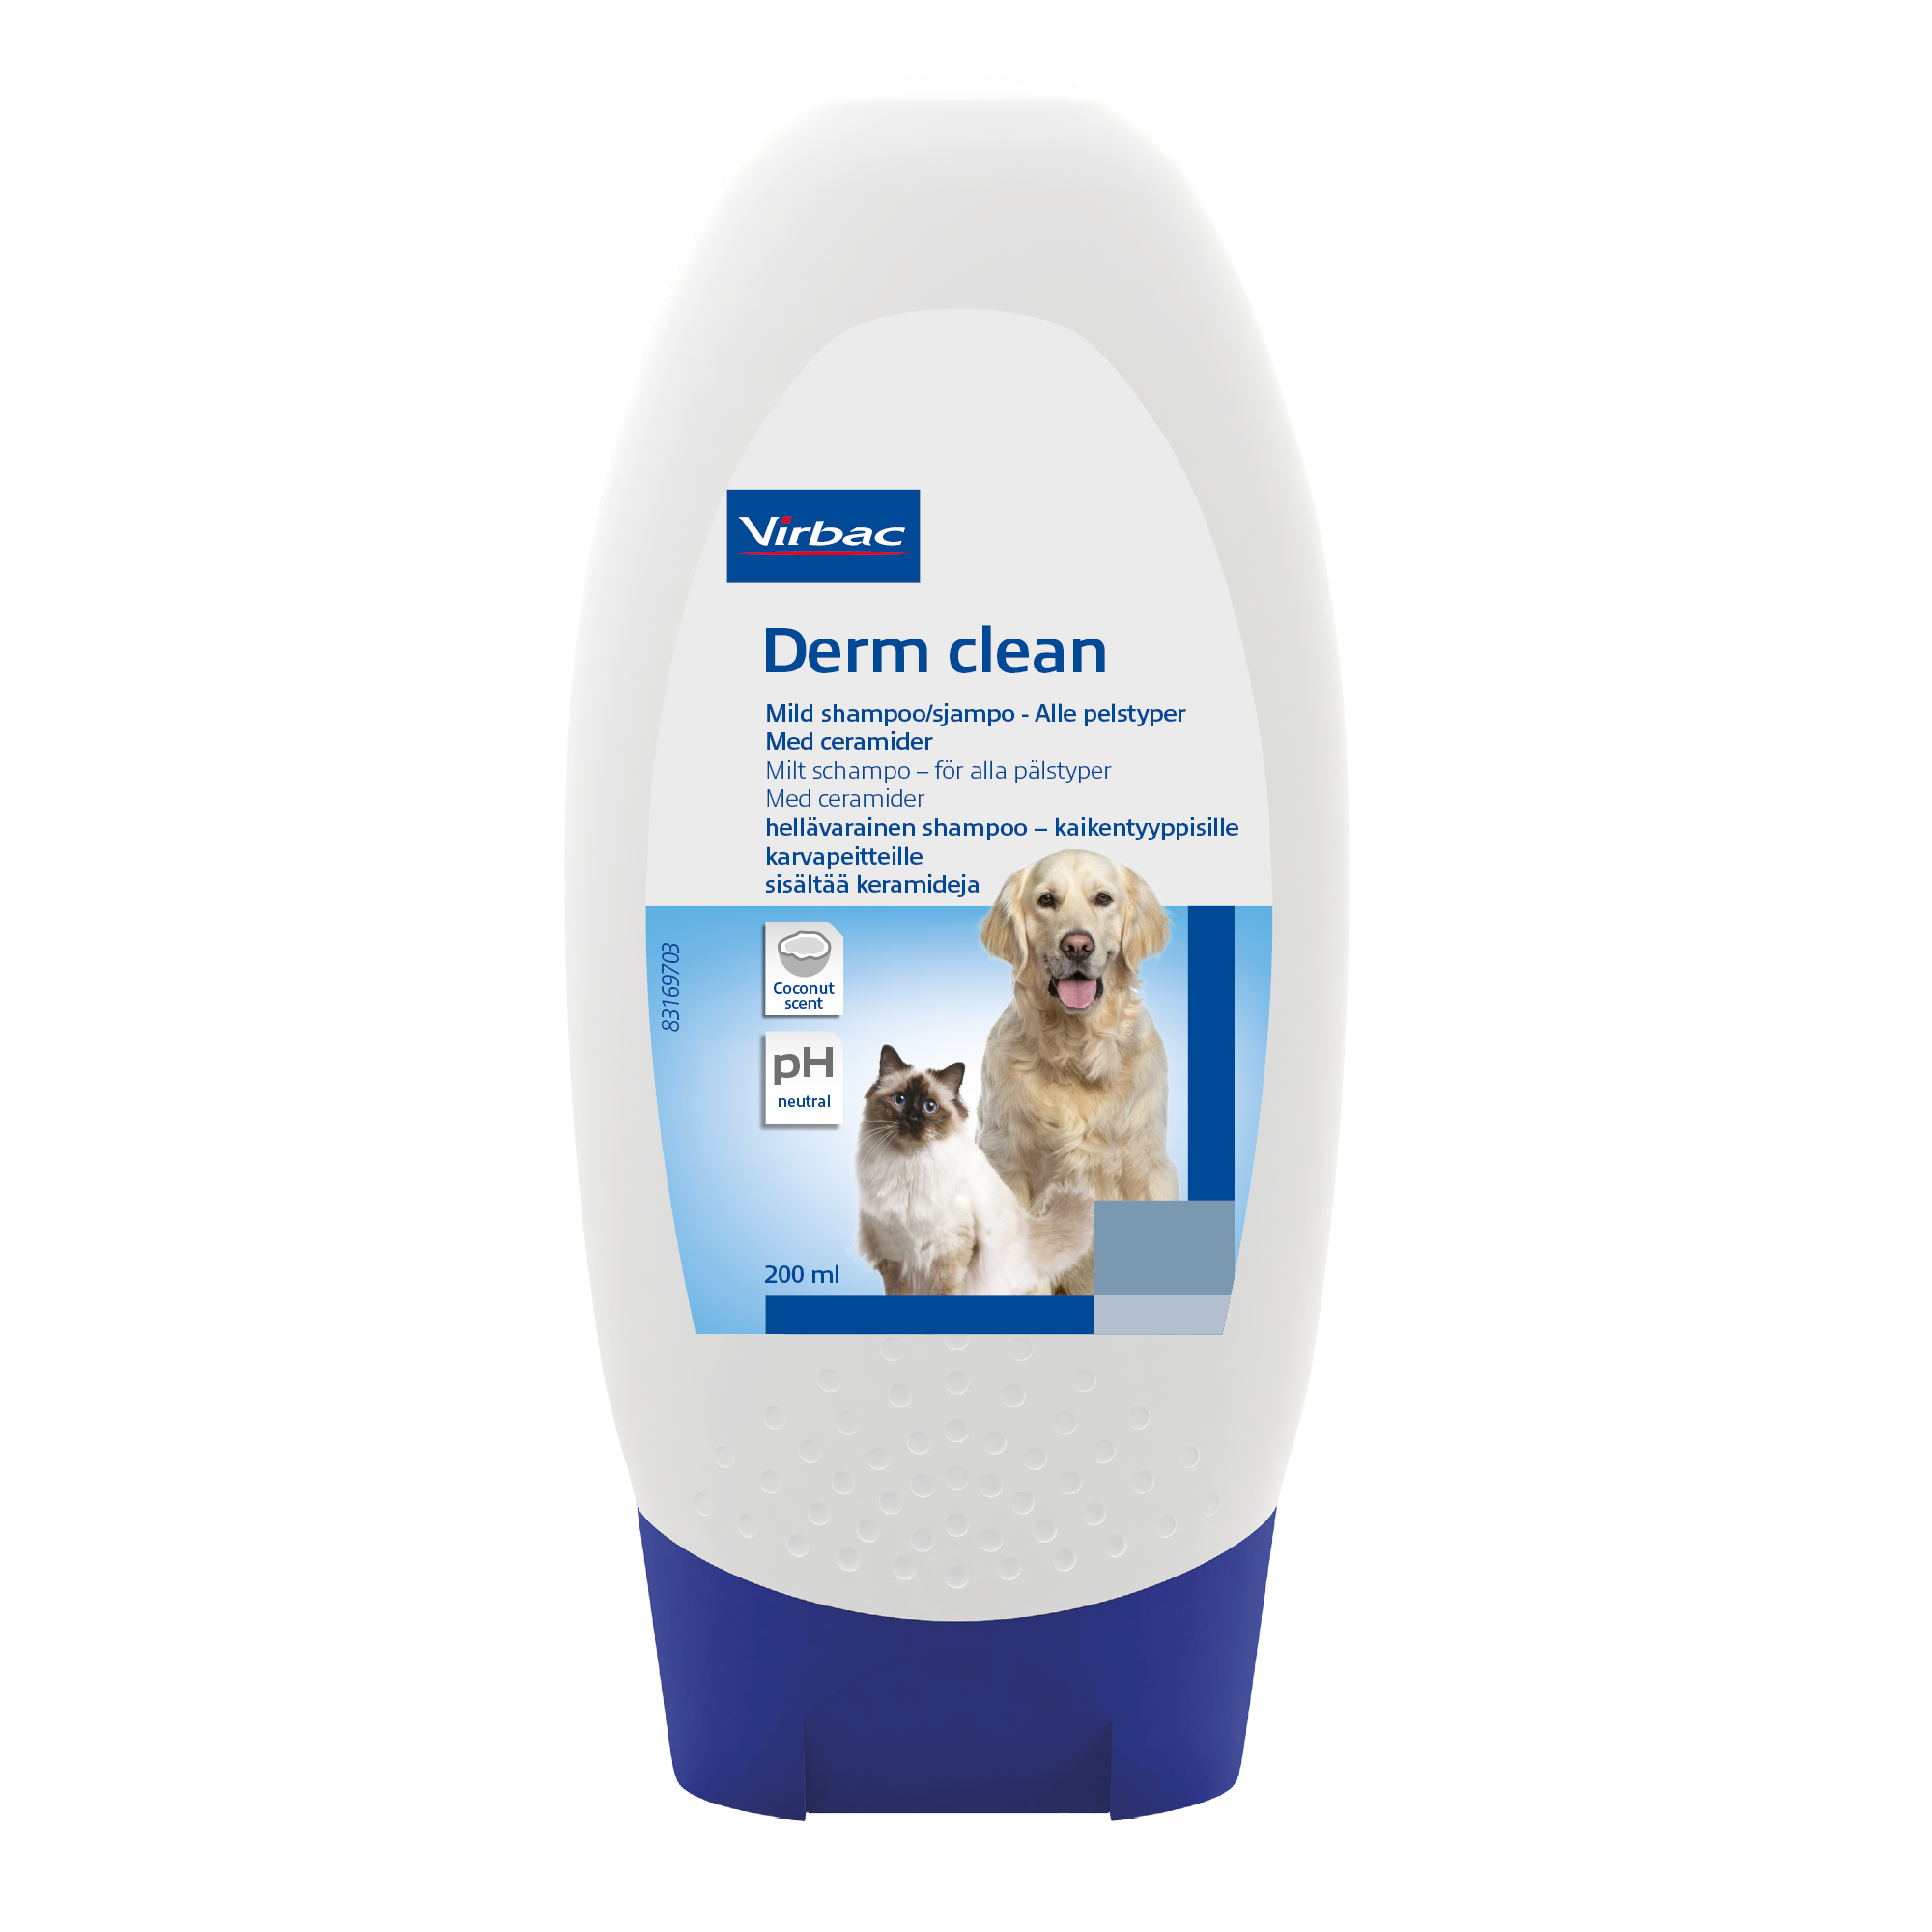 Derm Clean mild shampoo